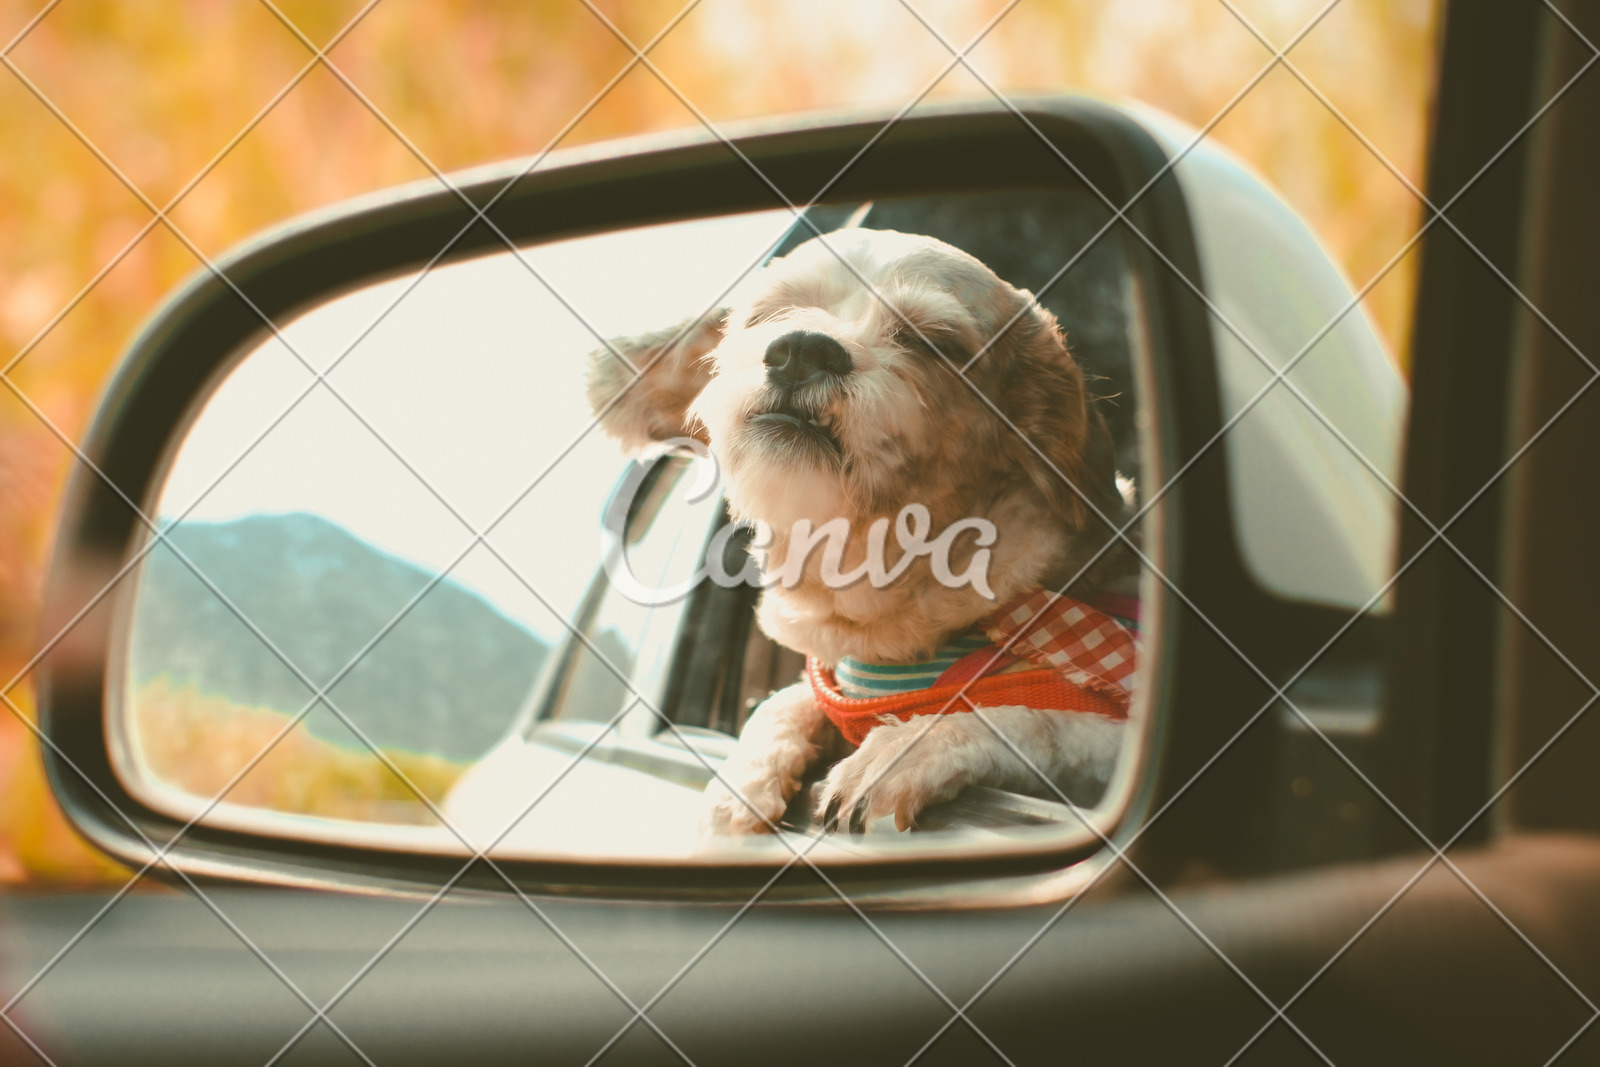 Cutely White Short Hair Shih Tzu Dog In Car Mirror Looking